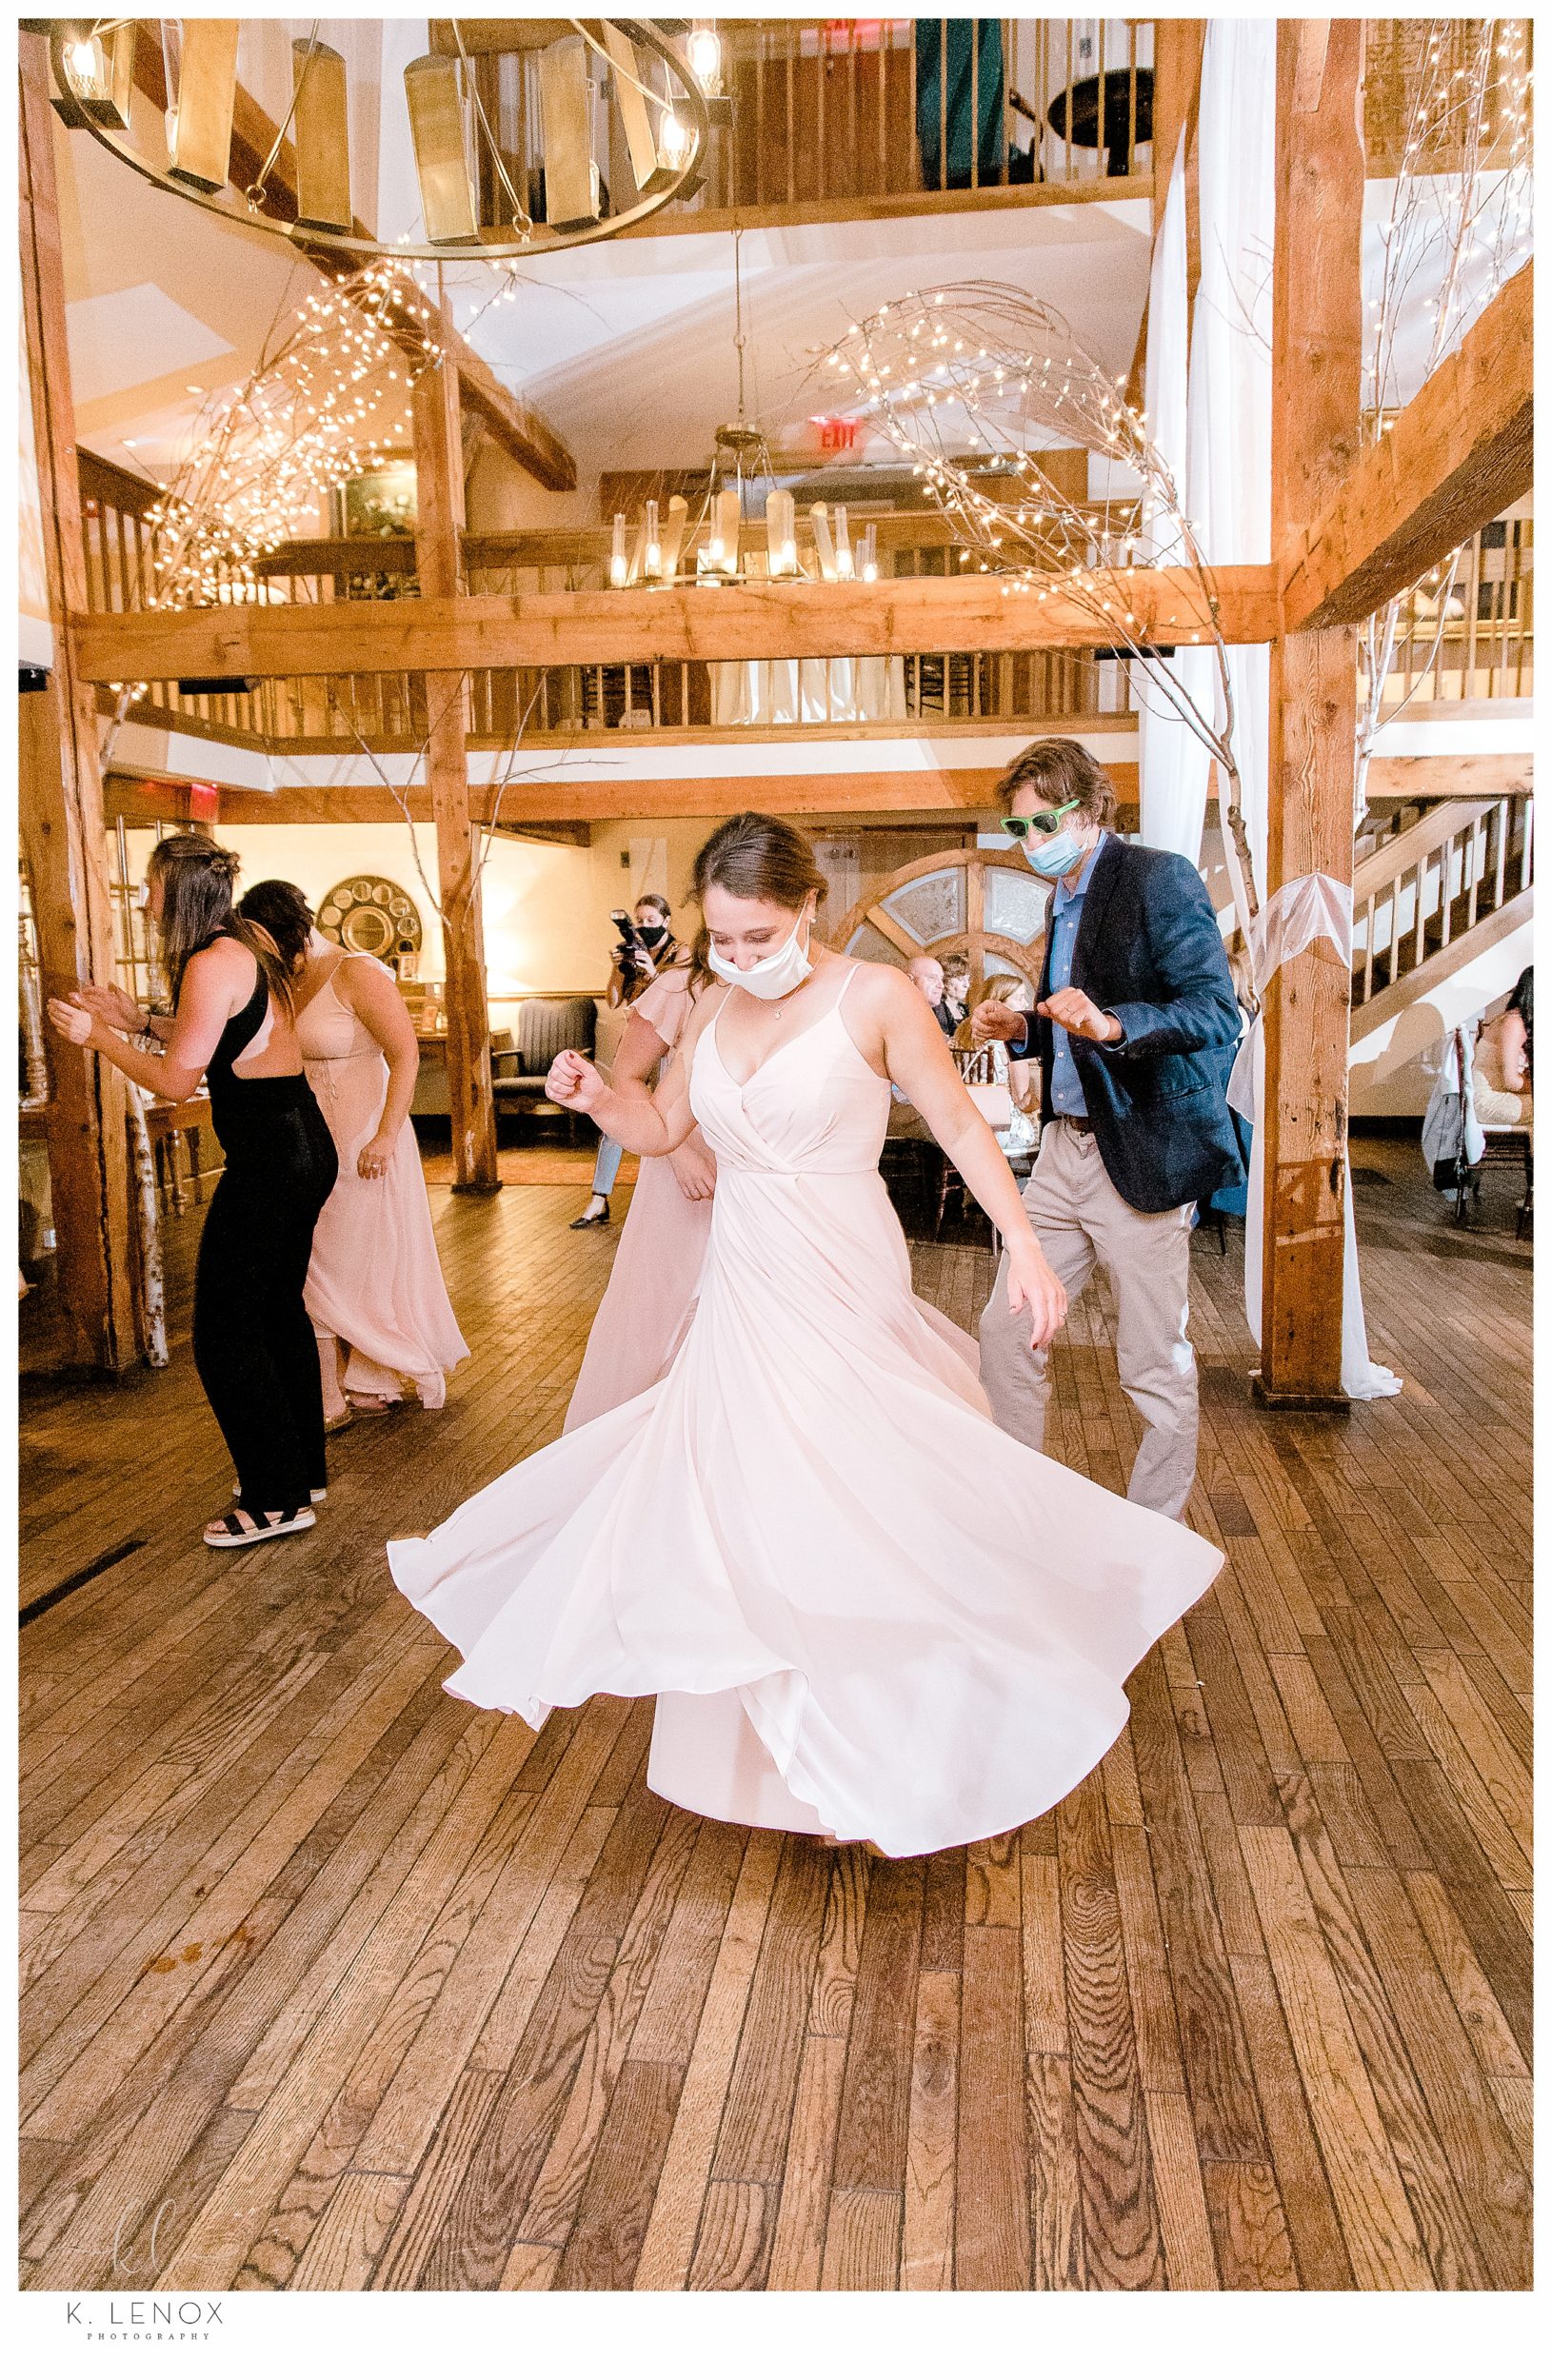 Summer Wedding at the Bedford Village Inn- Bridesmaid dances and twirls her dress. 